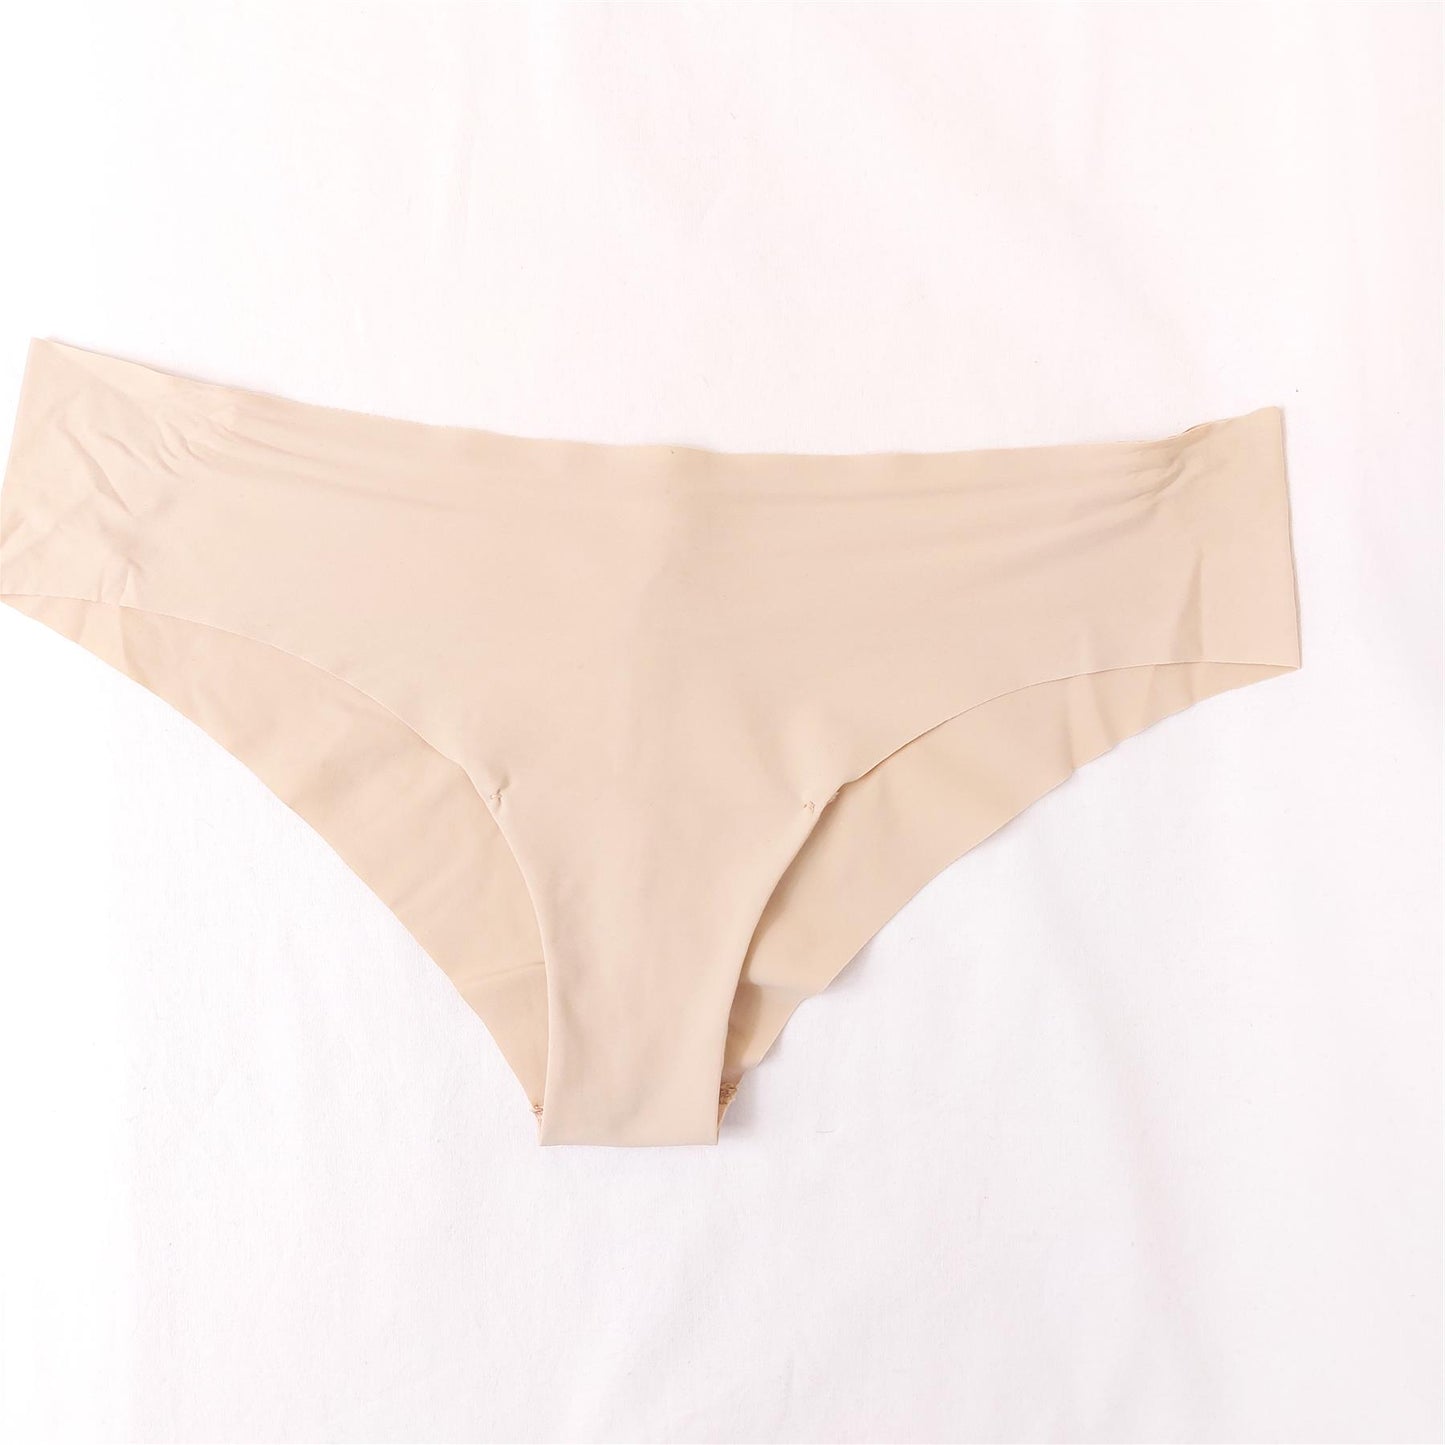 Women's Bikini Brief Knickers Laser Cut No VPL Cotton Lined Almond Size Large 3 Pack